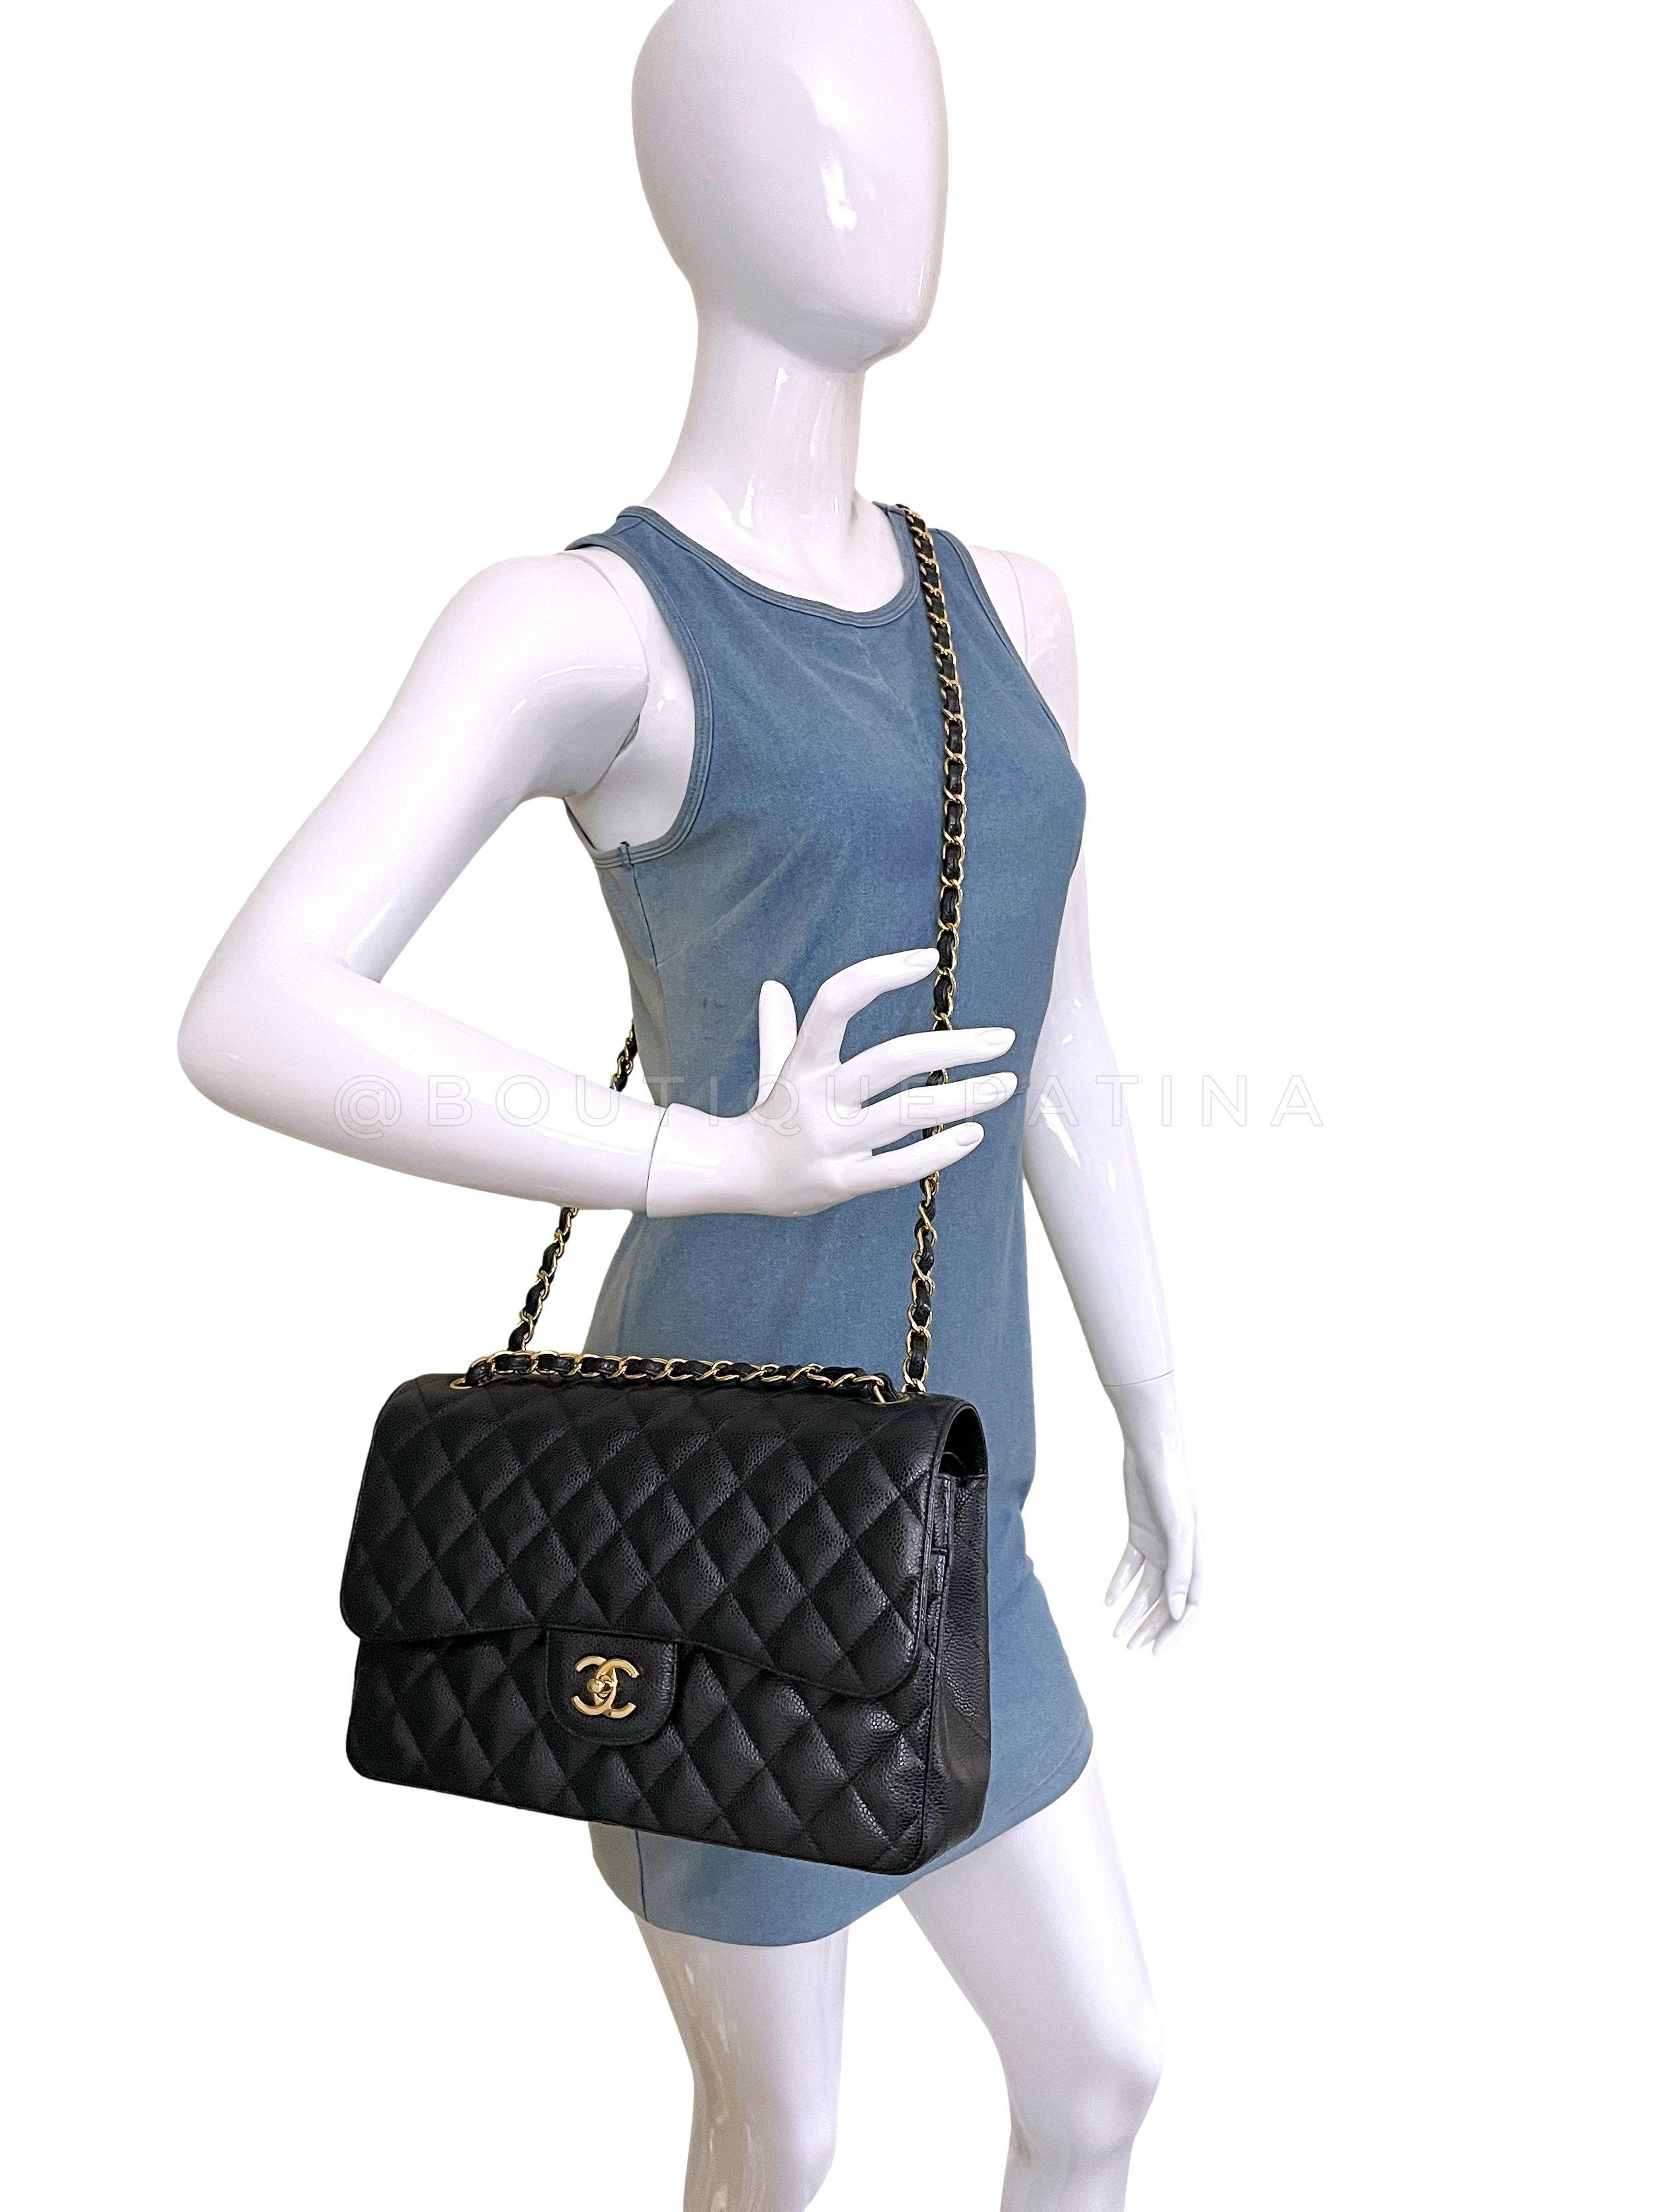 Chanel Black Caviar Jumbo Classic Double Flap Bag GHW 65399 For Sale 11